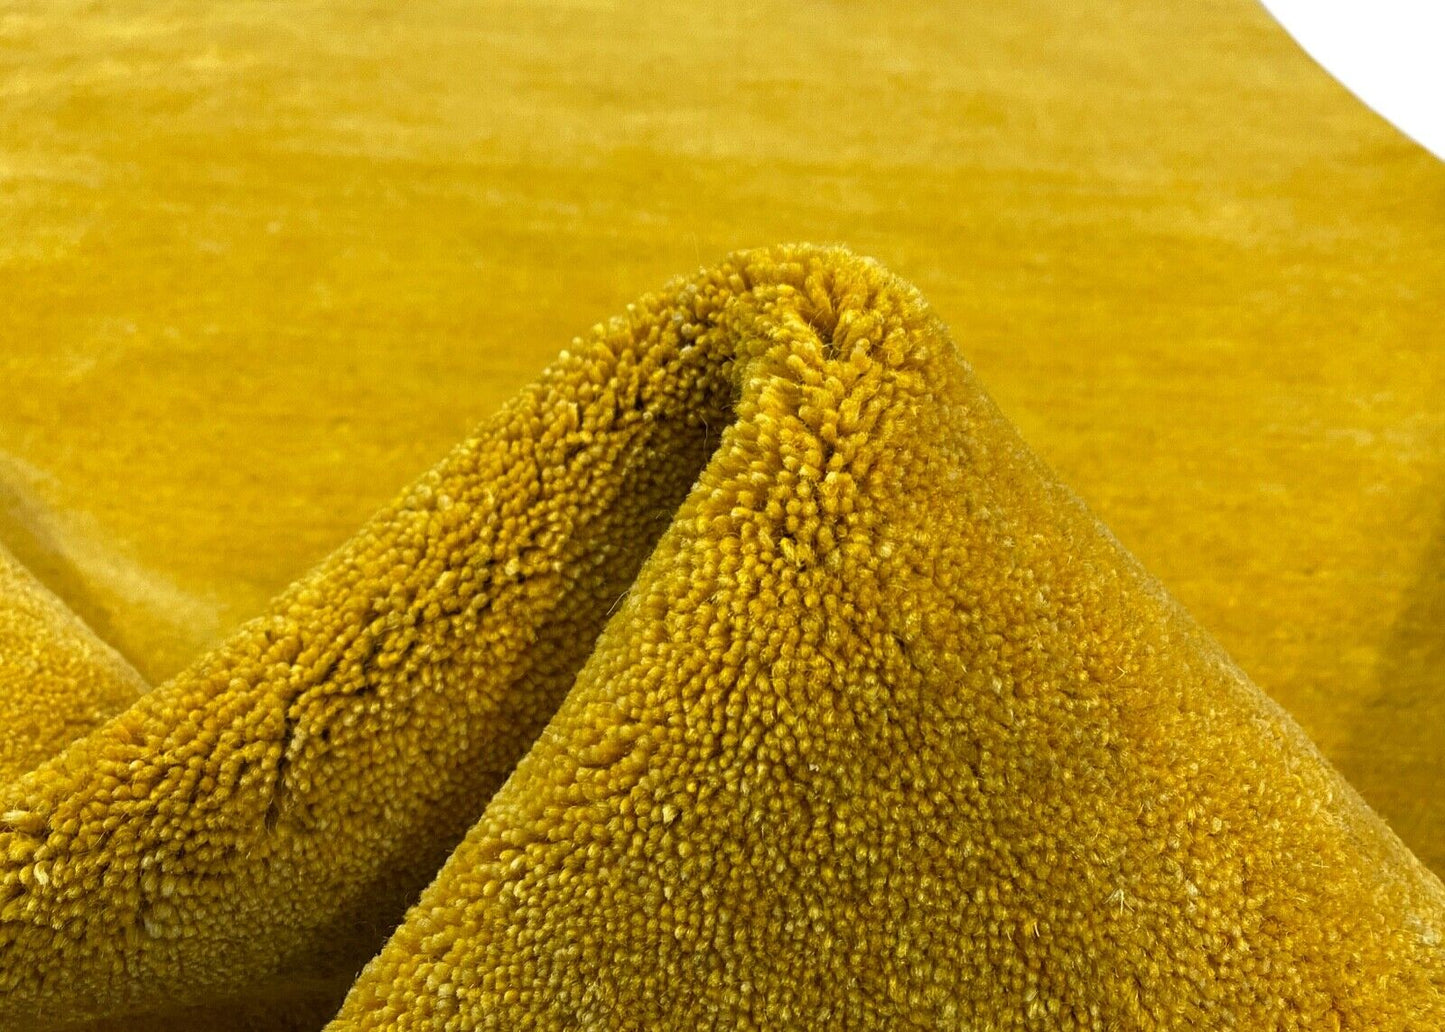 Gold Teppich 200x300 cm Gabbeh 100% Wolle Handgewebt Lori Buff Gelb G630